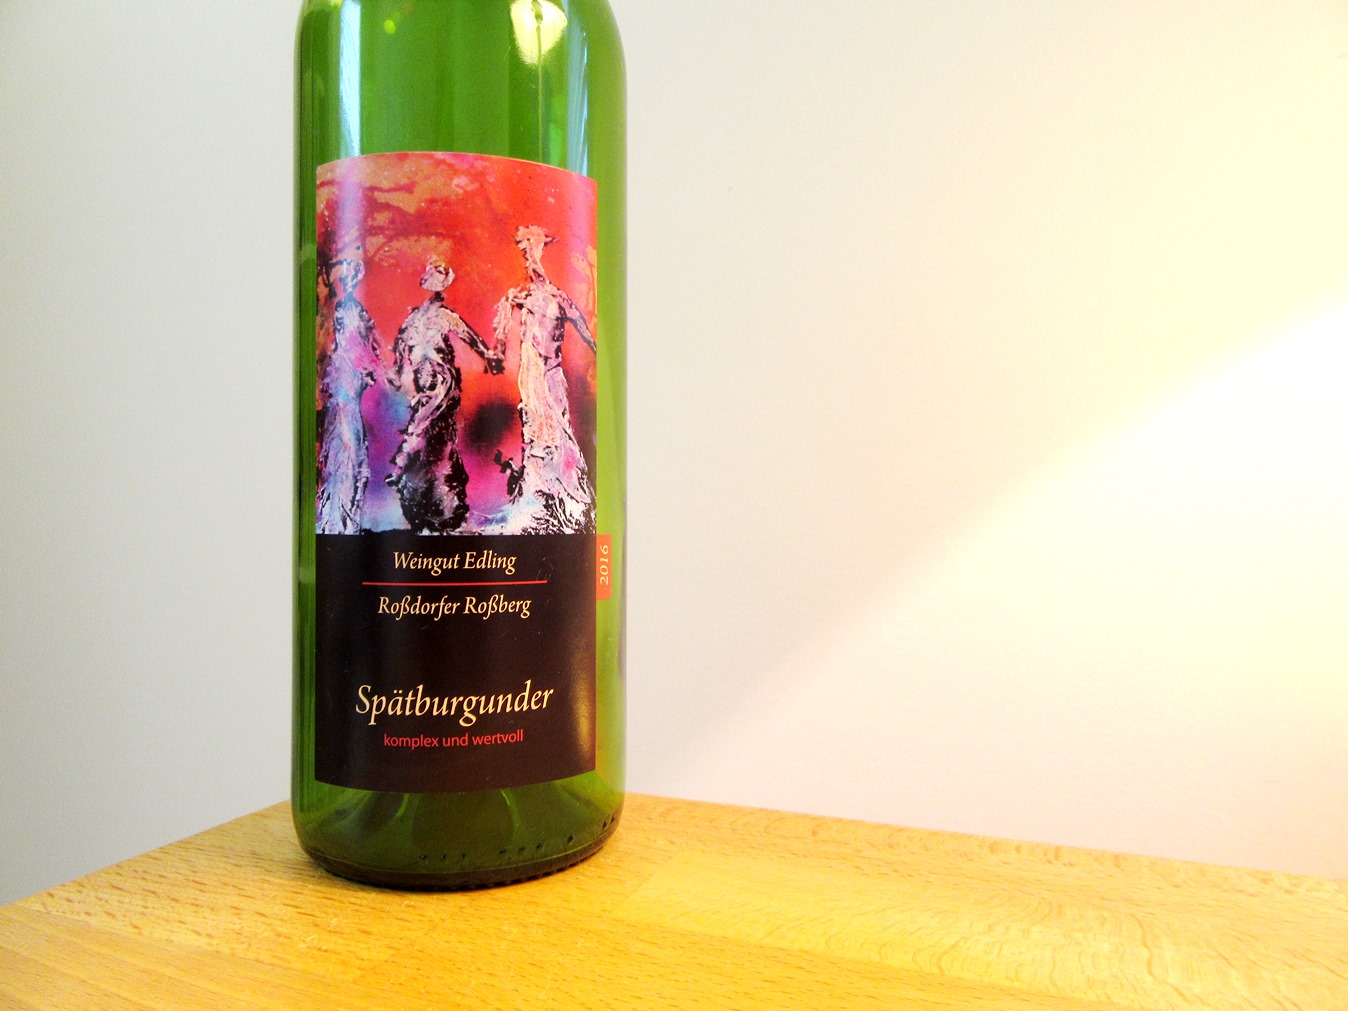 Weingut Edling, Ro?dorfer Ro?berg, Spätburgunder 2016, Germany, Wine Casual